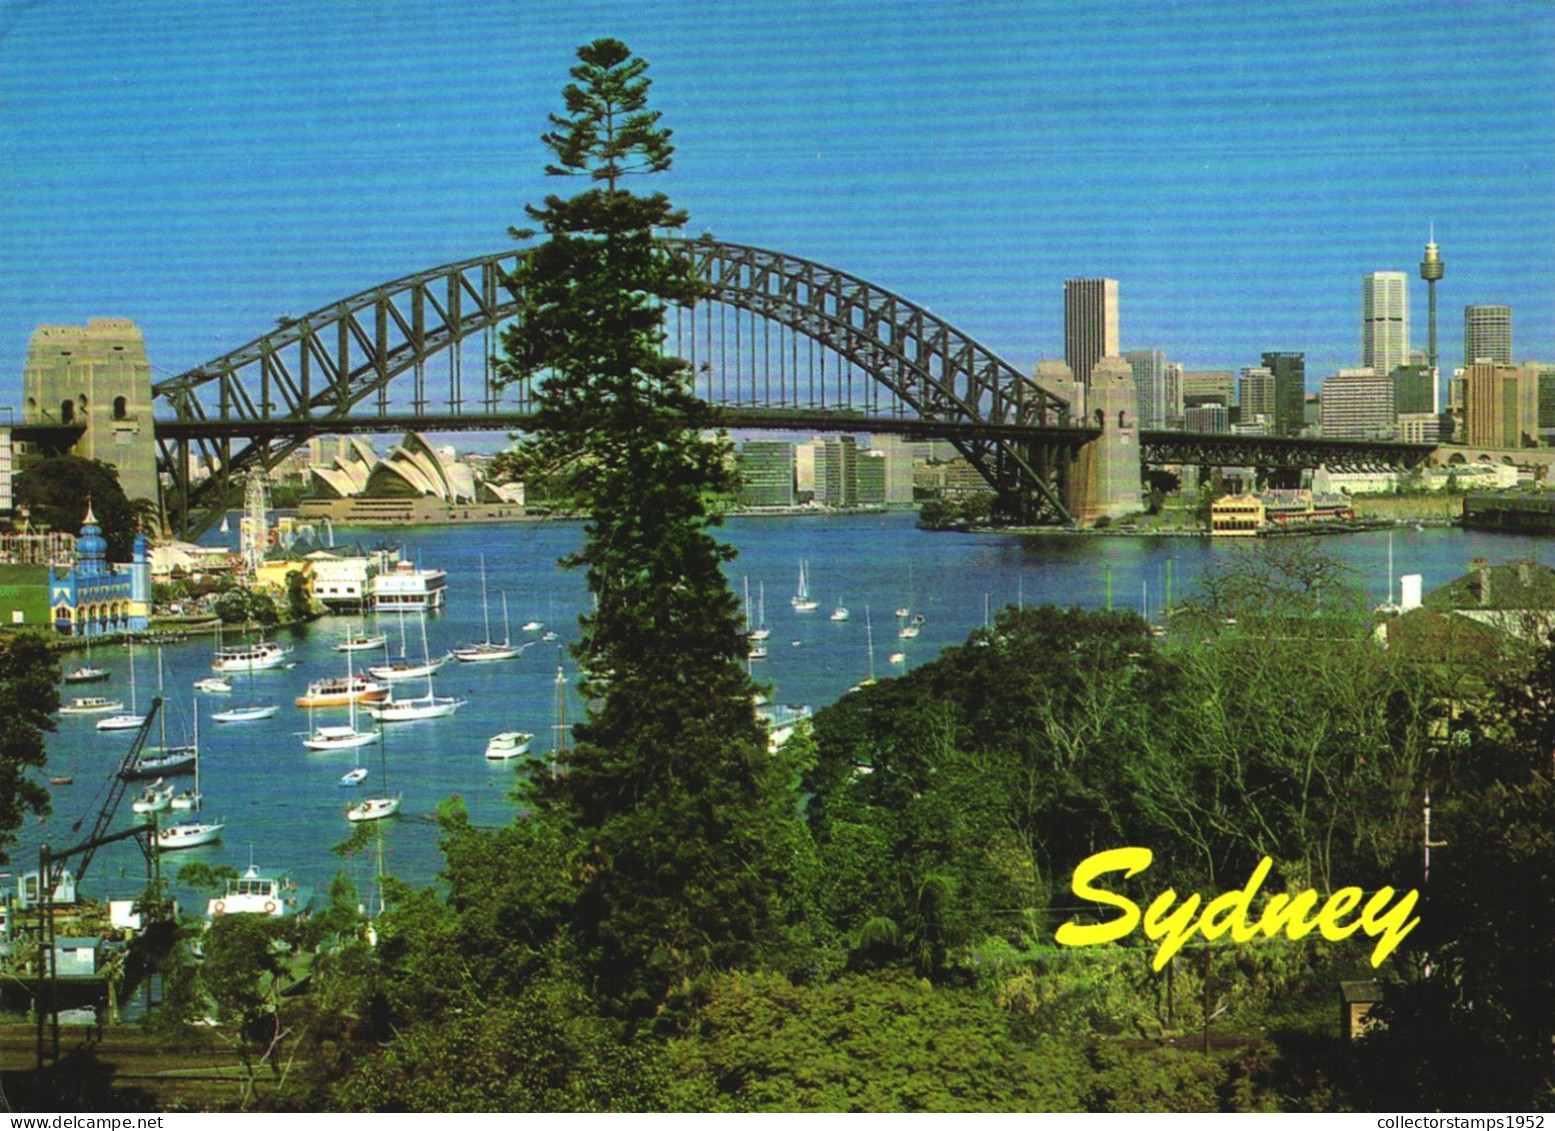 SYDNEY, ARCHITECTURE, BRIDGE, BOATS, SHIP, AUSTRALIA, POSTCARD - Sydney